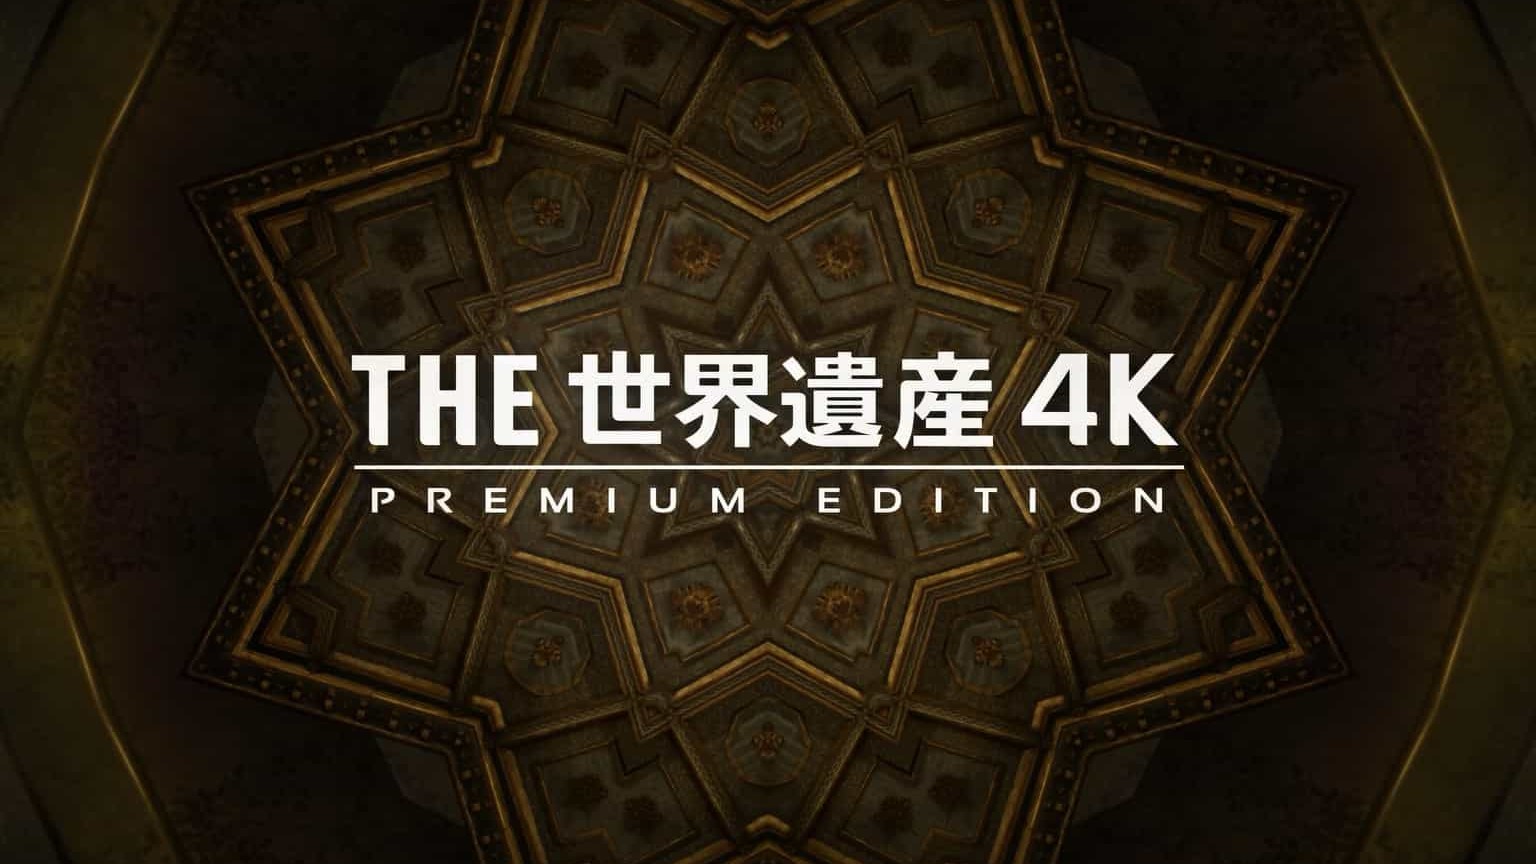 TBS纪录片《世界遗产4K豪华特辑》全12集 中日双语字幕 4K超高清网盘下载